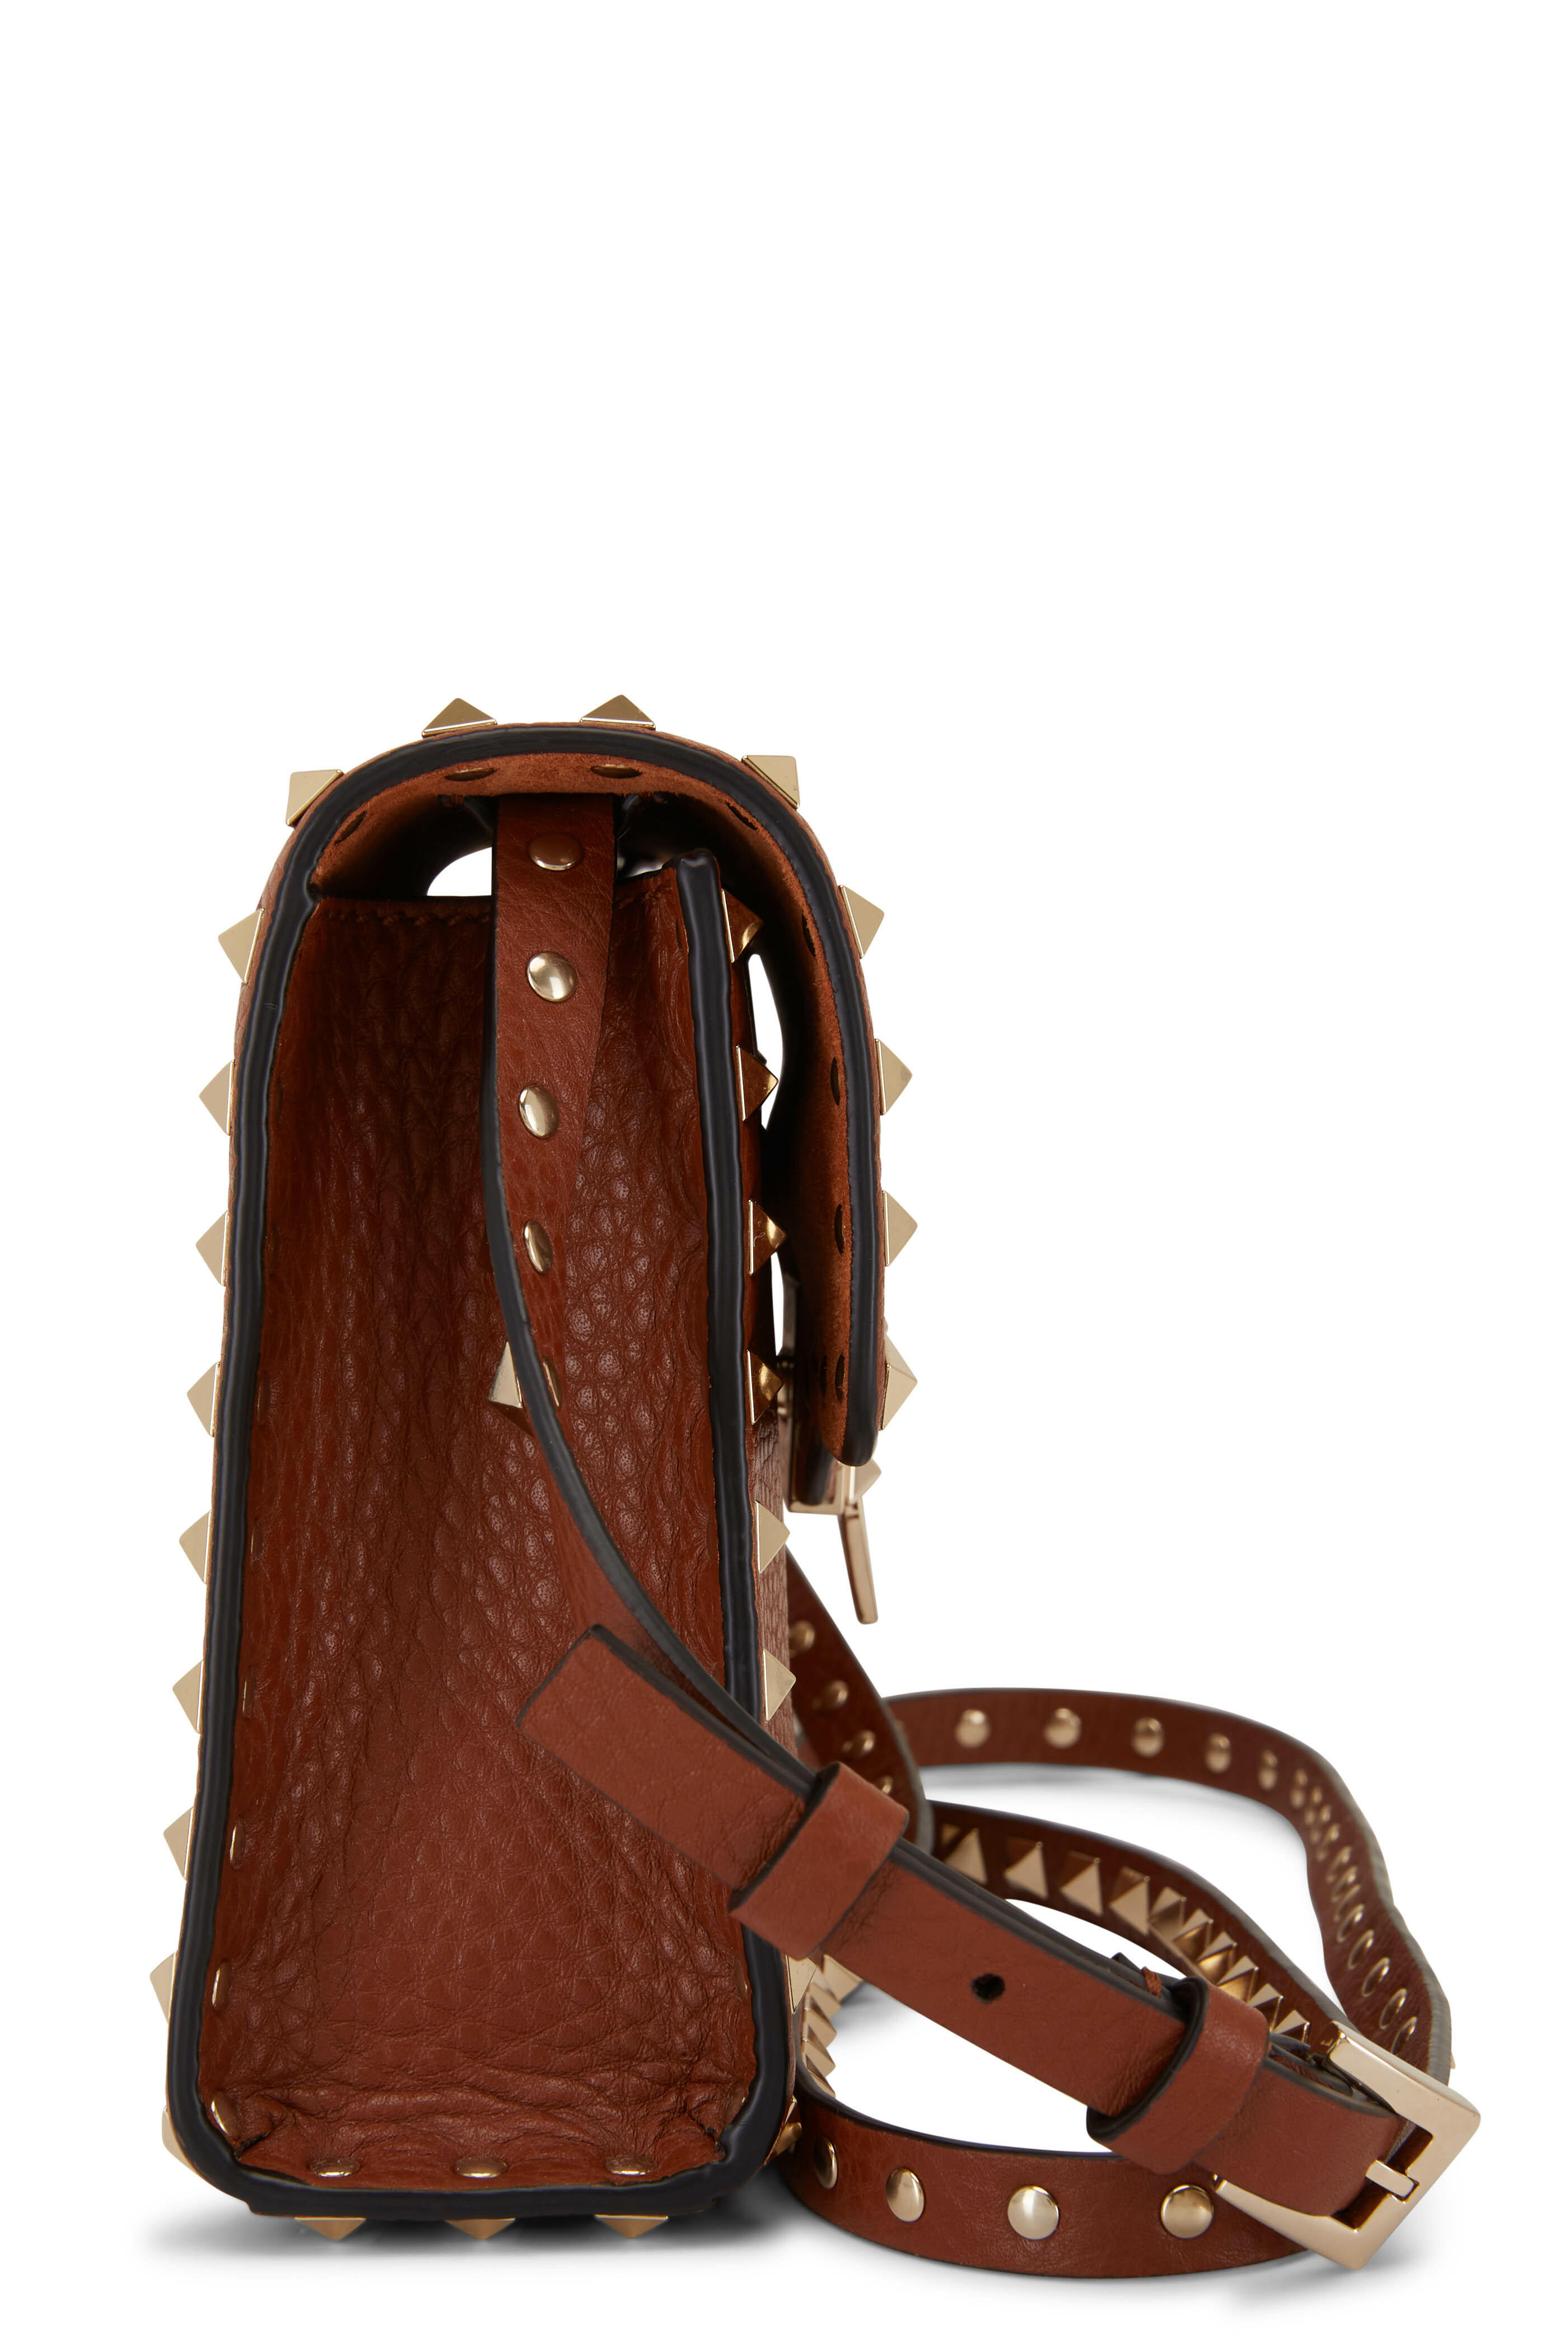 Valentino Garavani Rockstud Small Leather Shoulder Bag in Brown - Valentino  Garavani